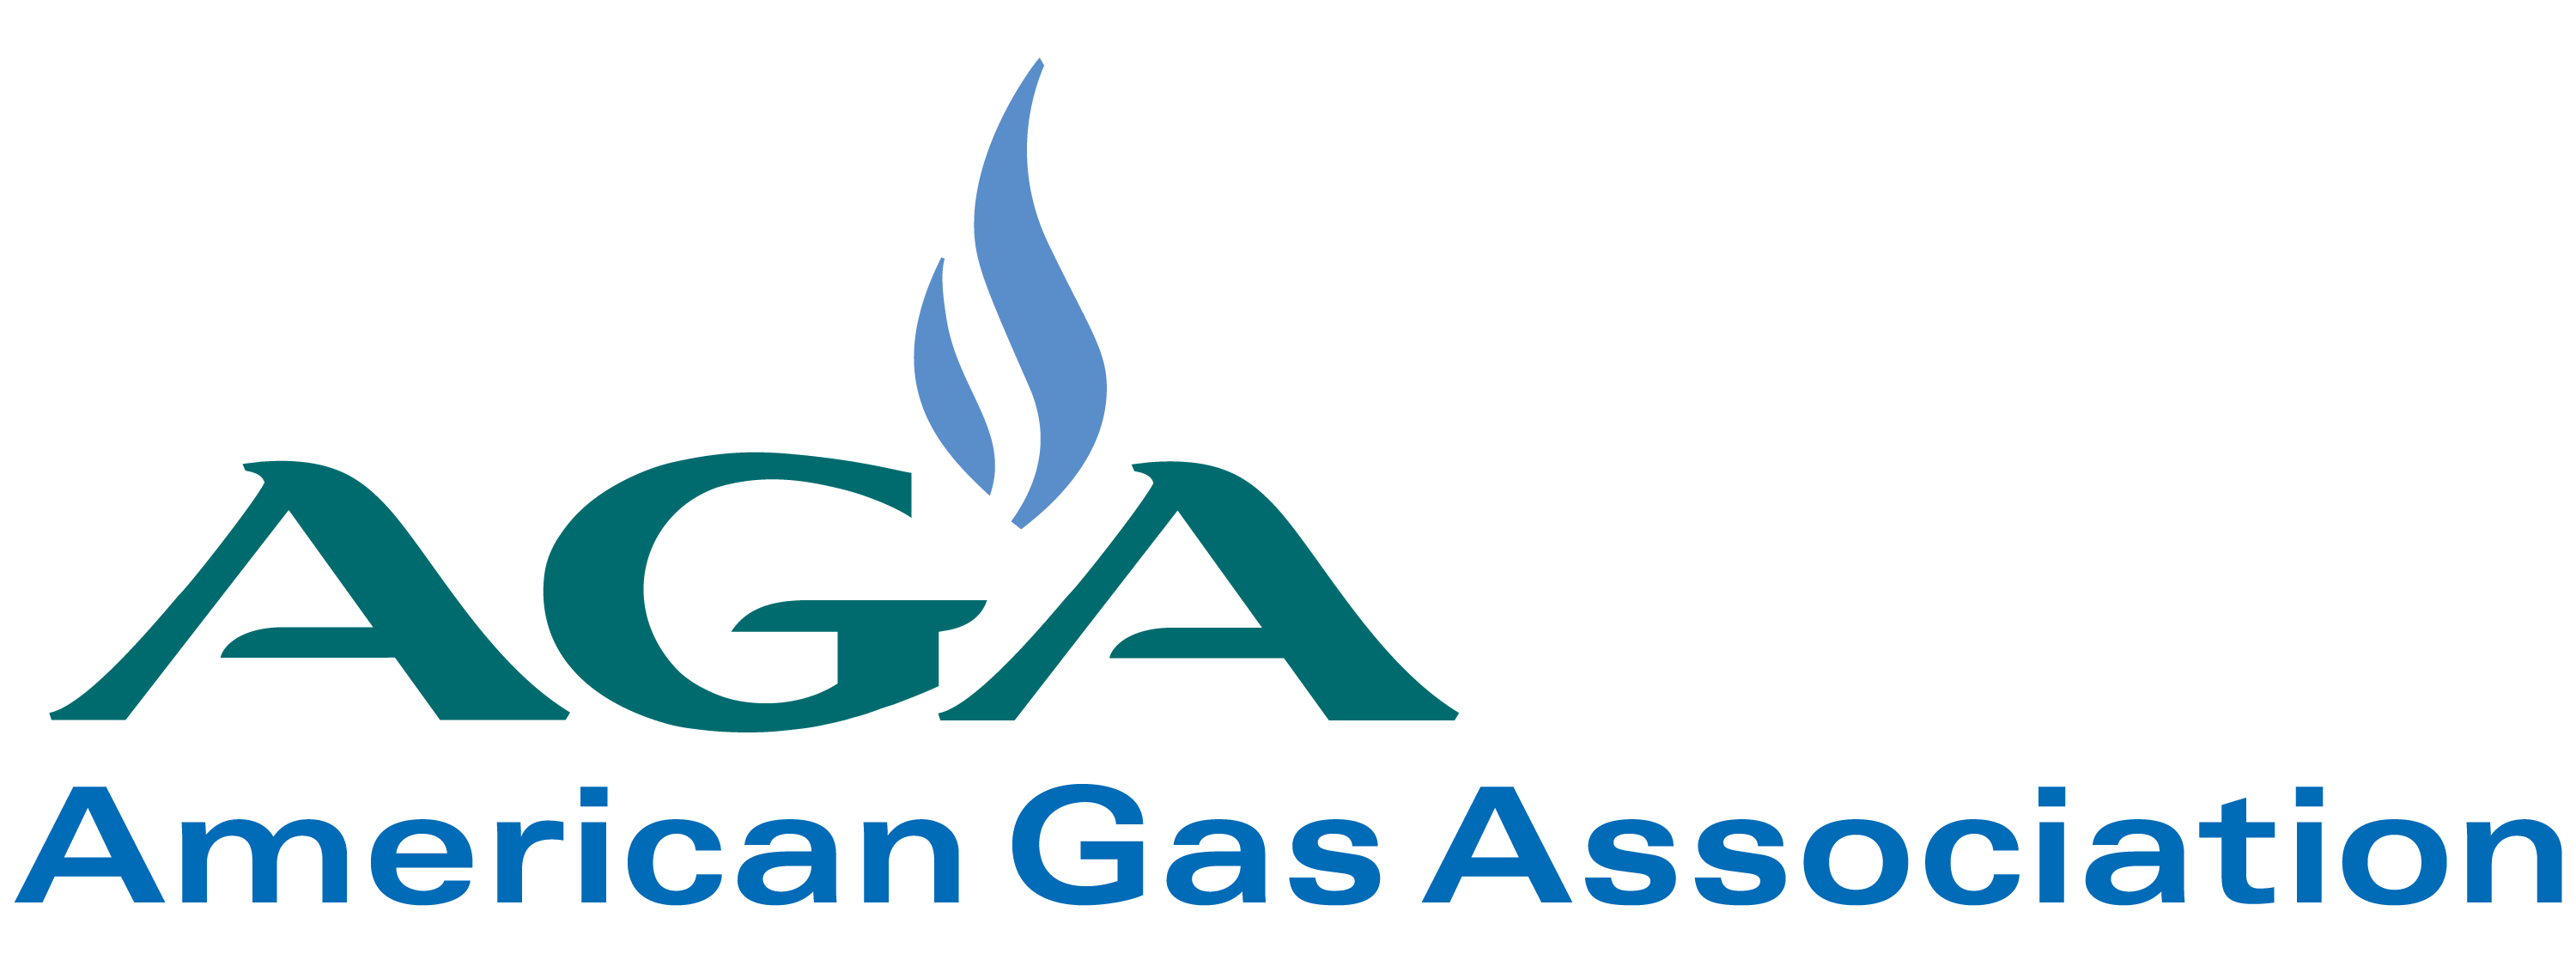 American Gas Association Company Logo